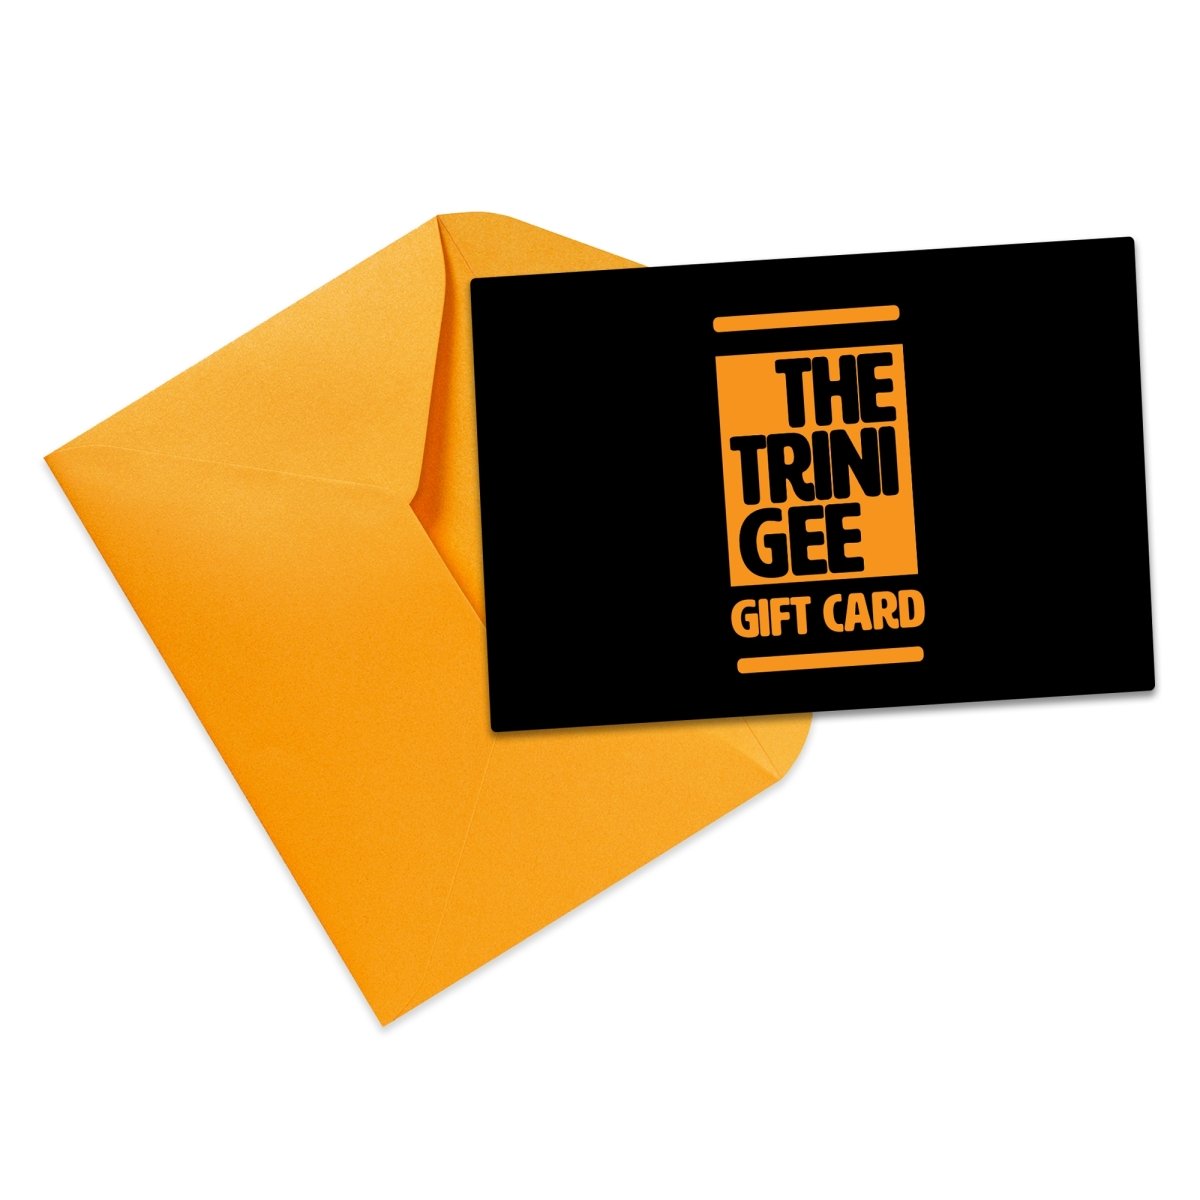 The Trini Gee Gift Card - The Trini Gee